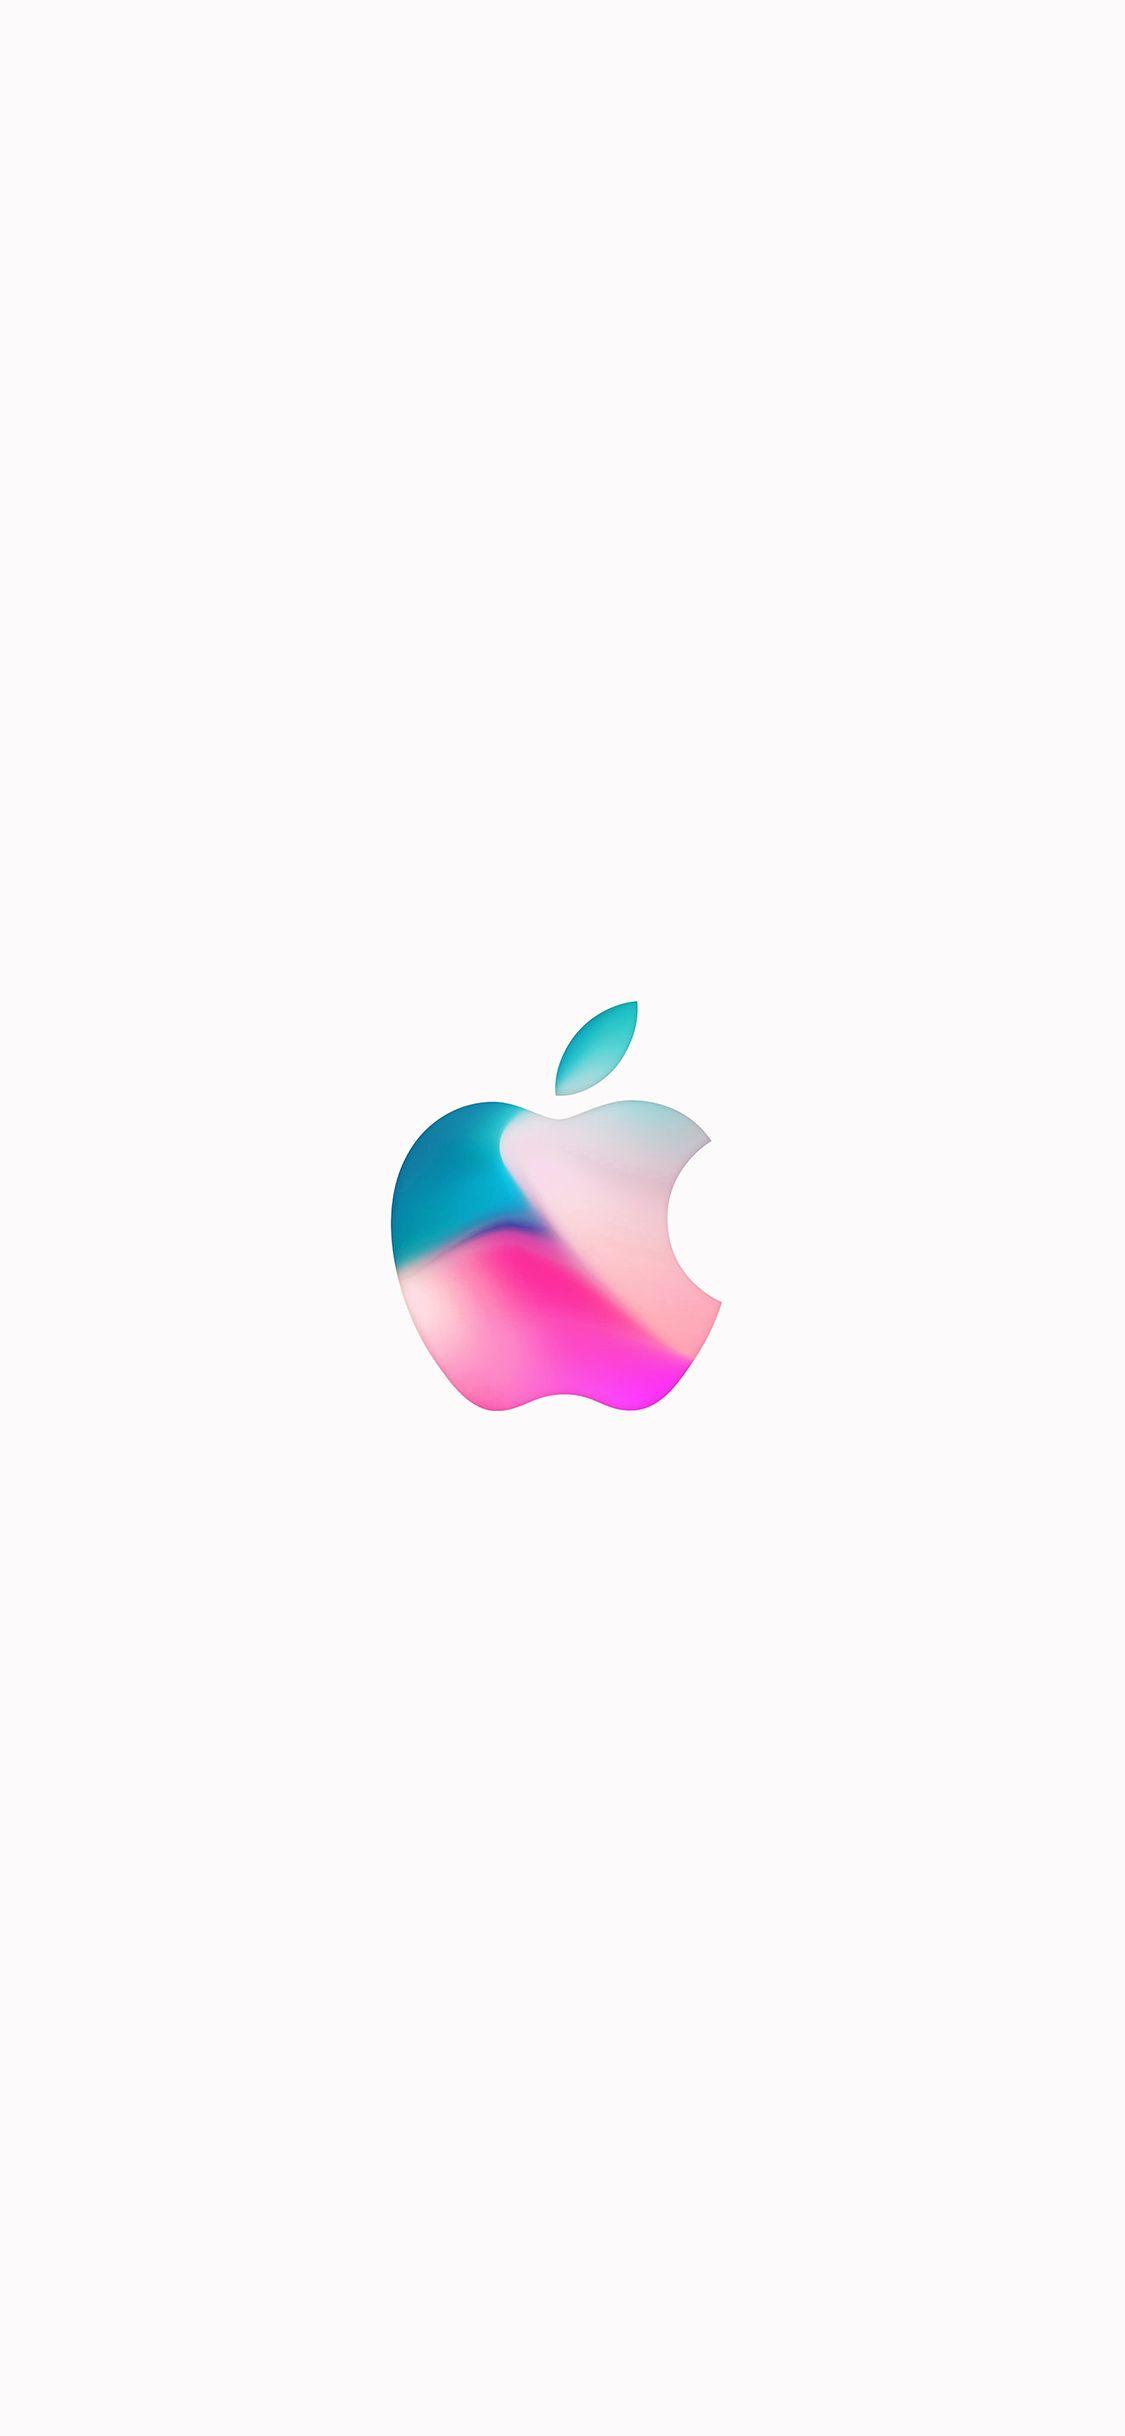 iPhone X Logo - iPhoneXpapers.com | iPhone X wallpaper | bb79-apple-iphonex-logo ...